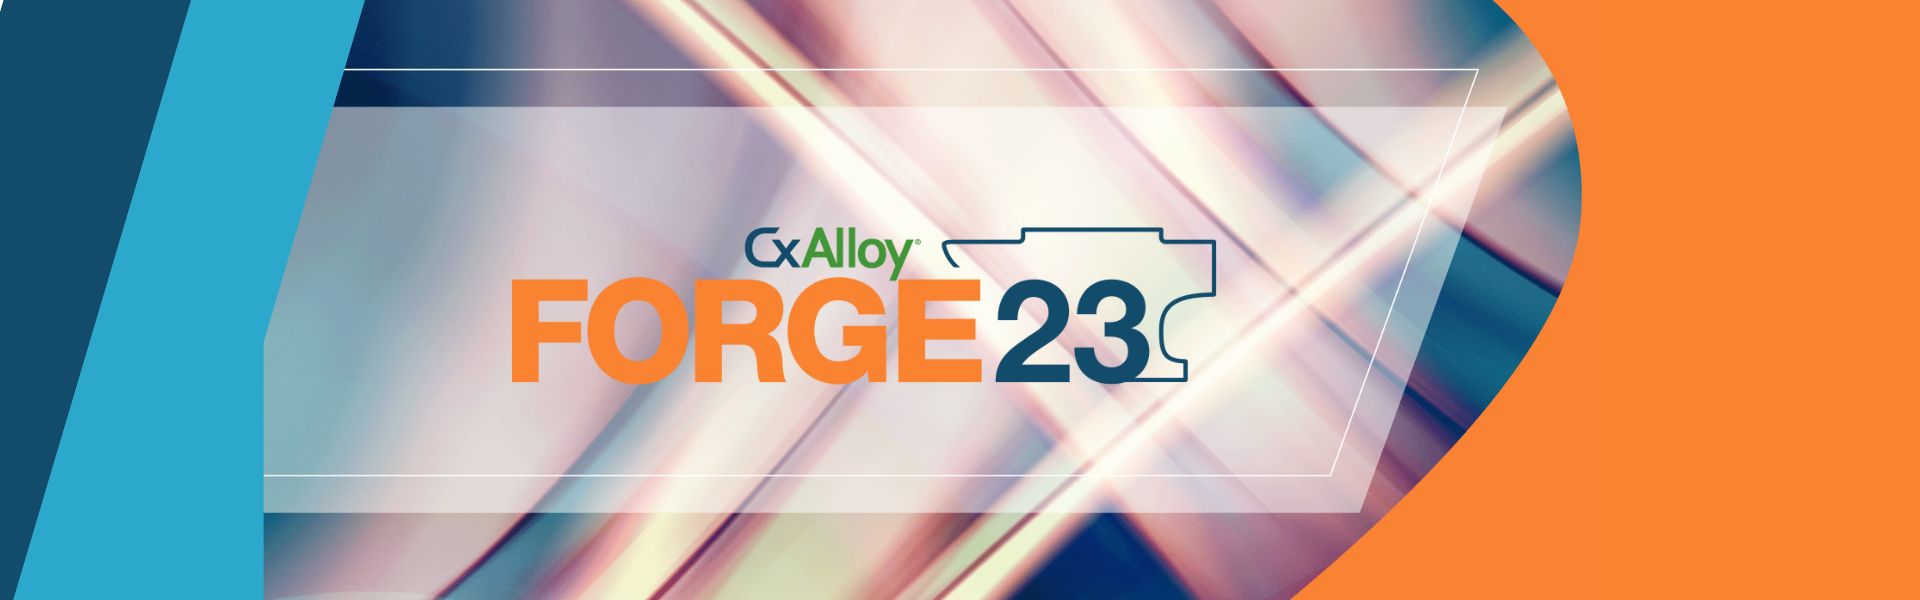 CxAlloy Forge23